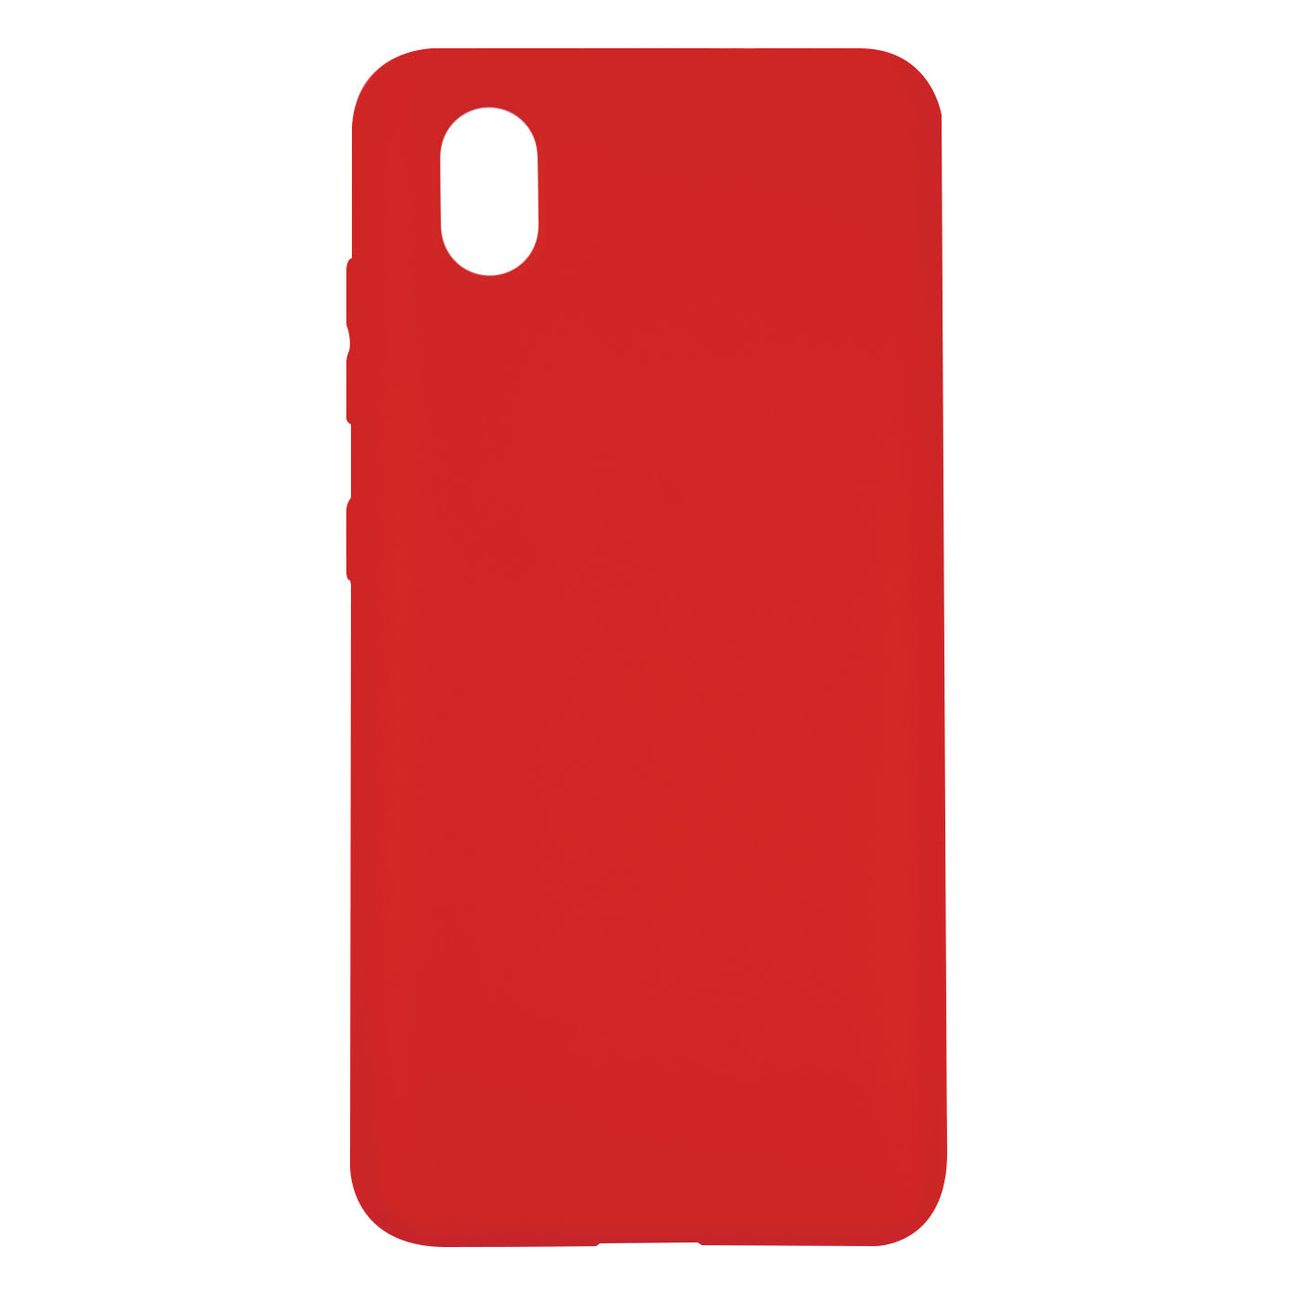 Чехол-накладка Red Line Ultimate для смартфона ZTE Blade A3 (2020), силикон, красный (УТ000026587)